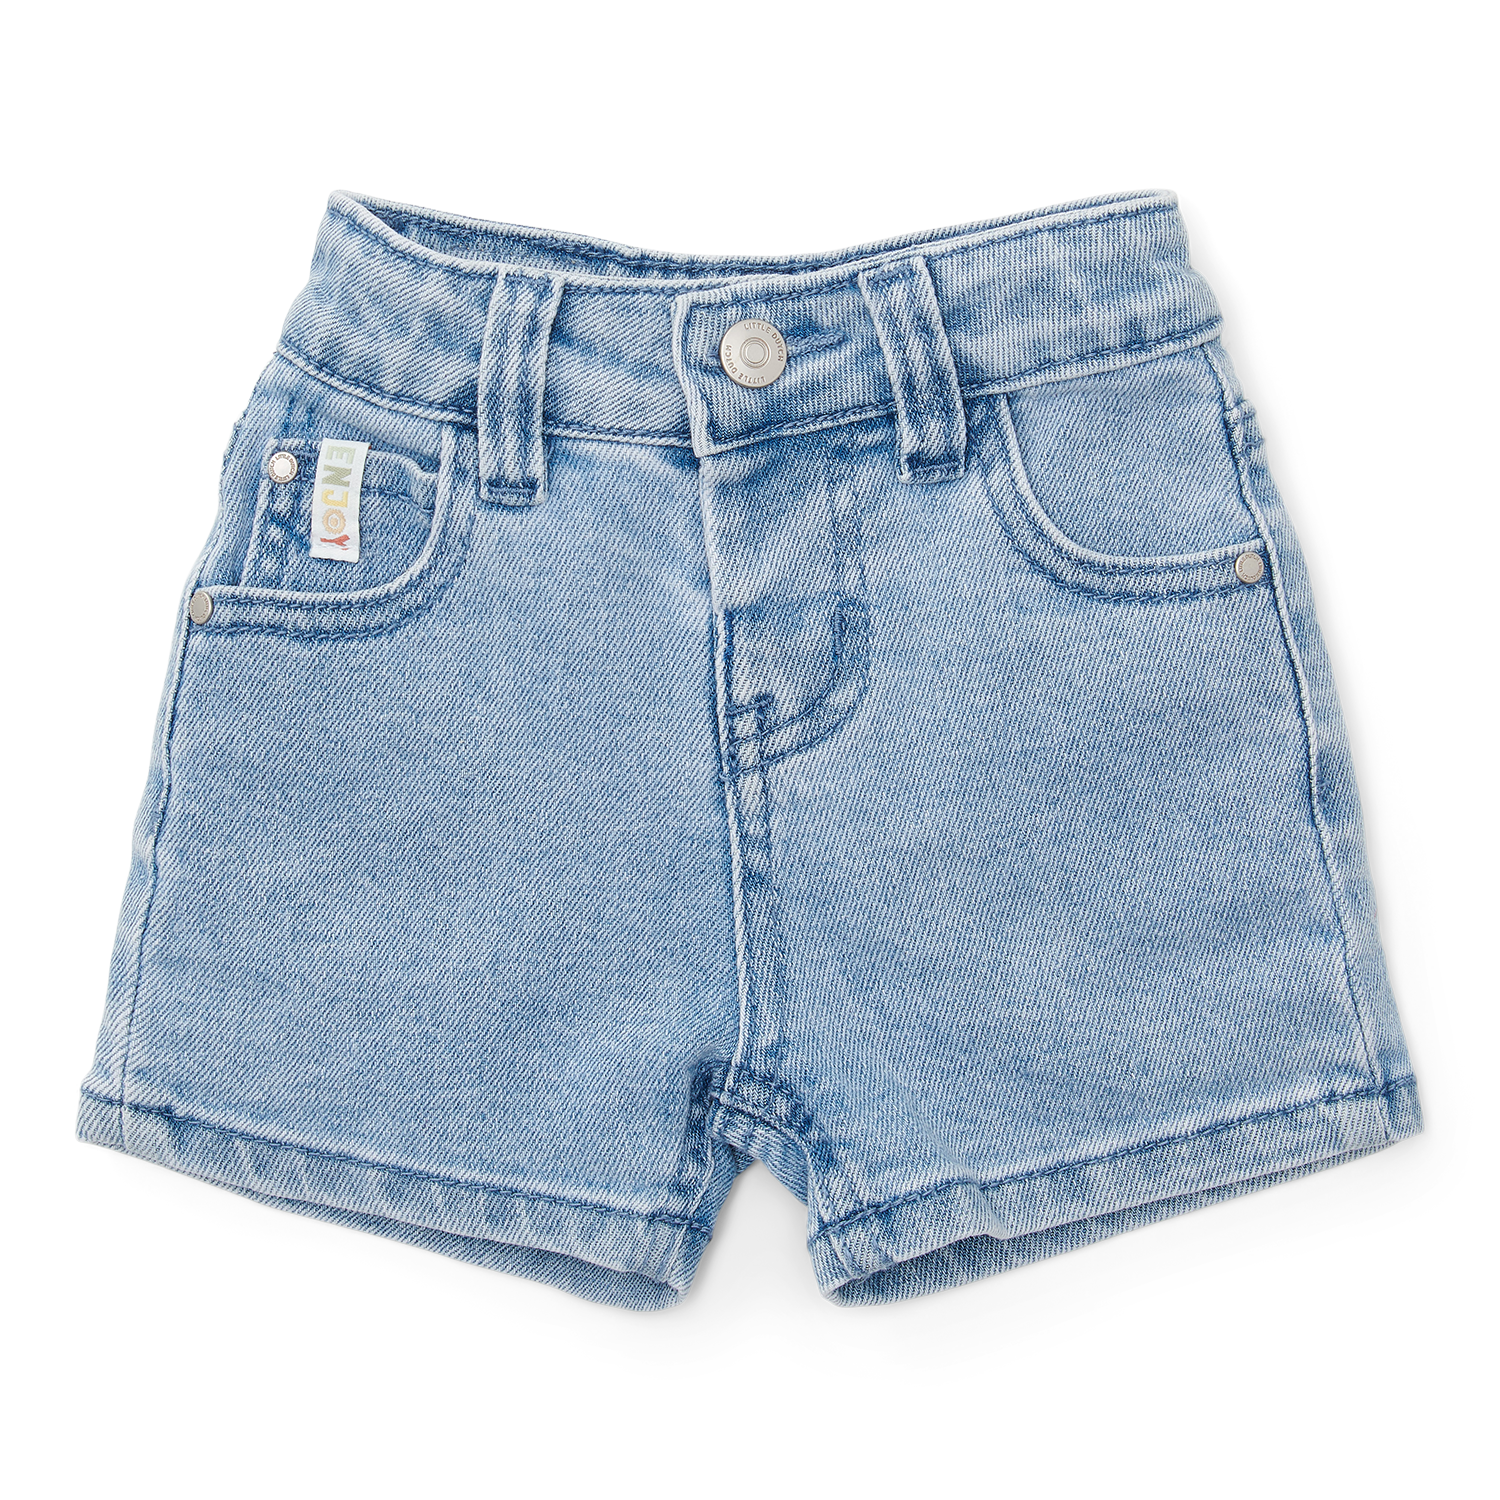 Kurze Hose / Shorts Denim mit Taschen Little Farm jeans (Gr. 80)